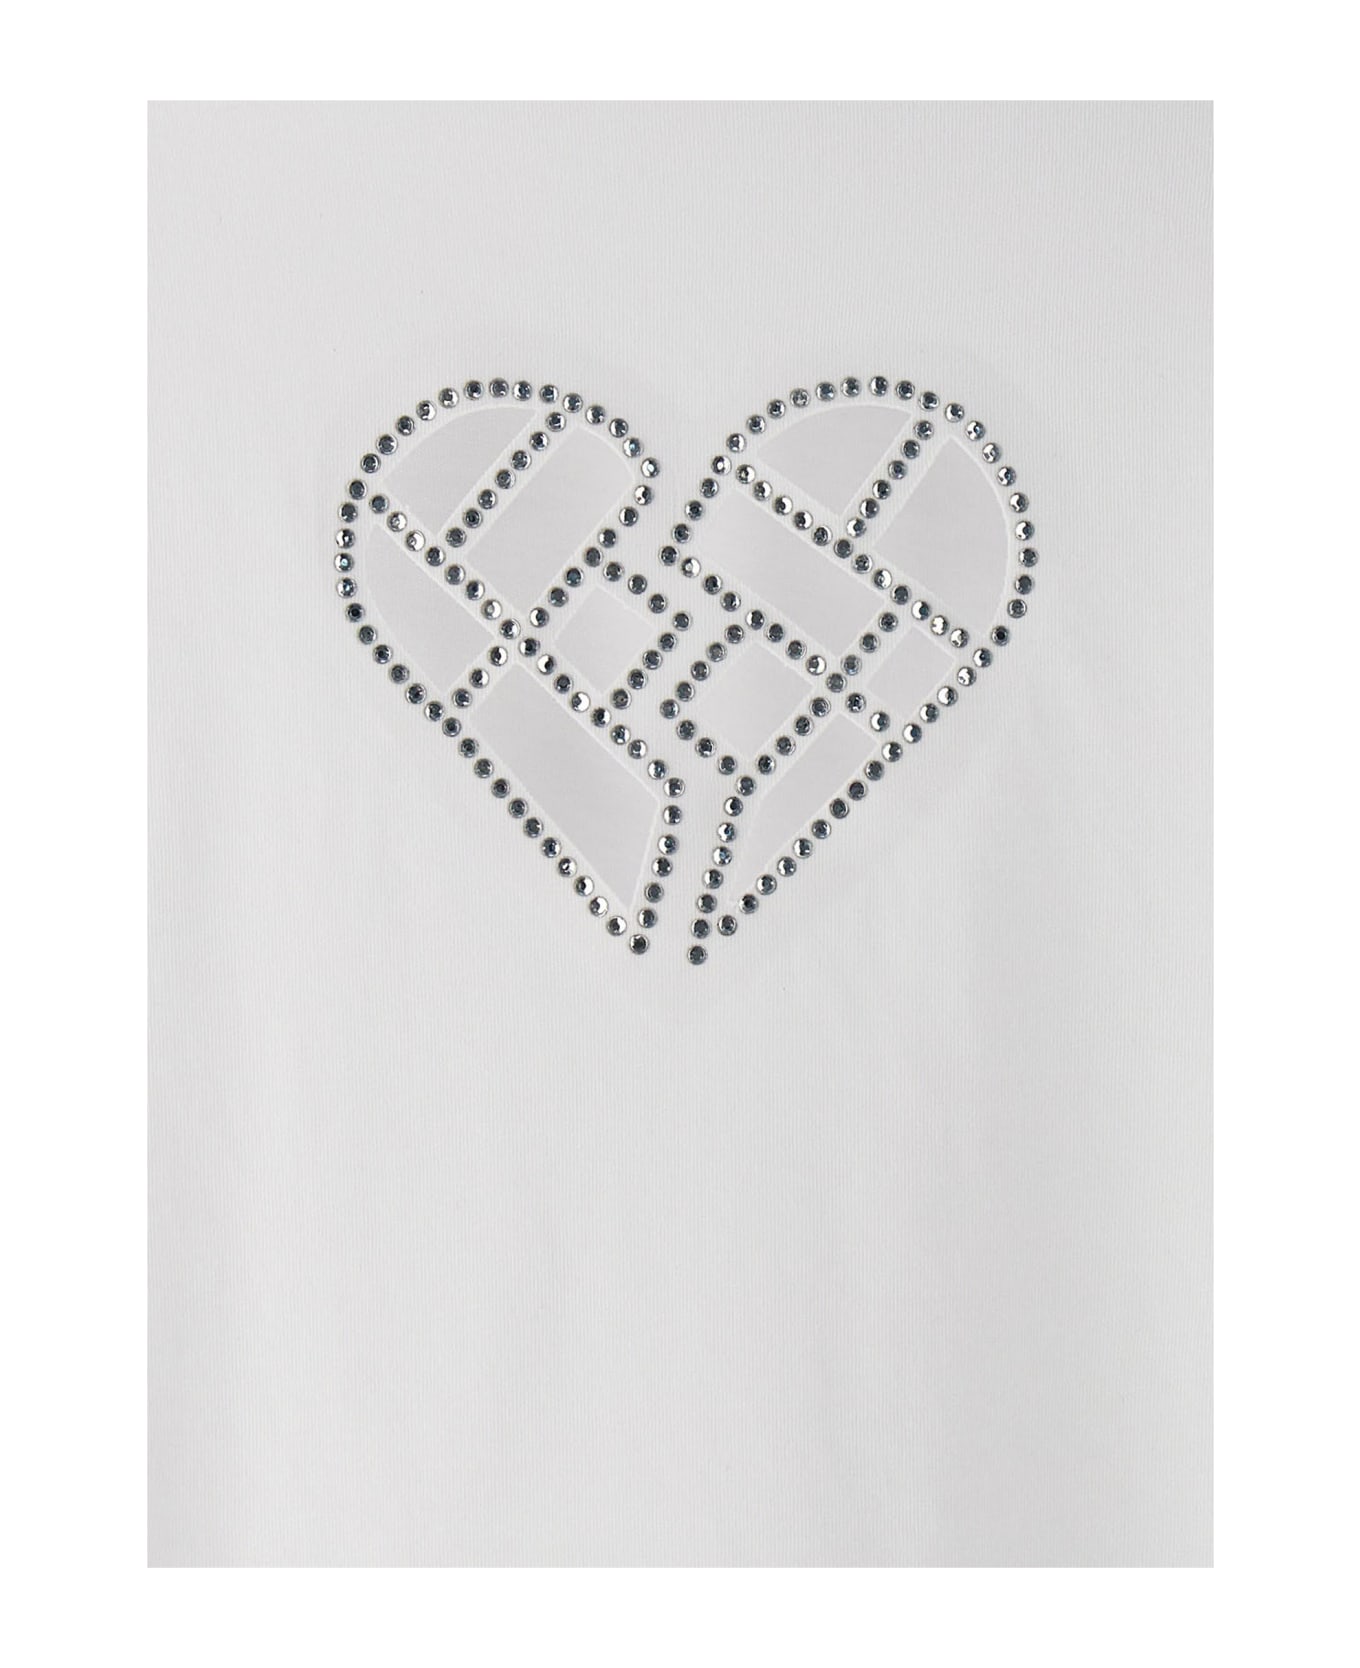 Rotate by Birger Christensen Logo T-shirt - Bright White